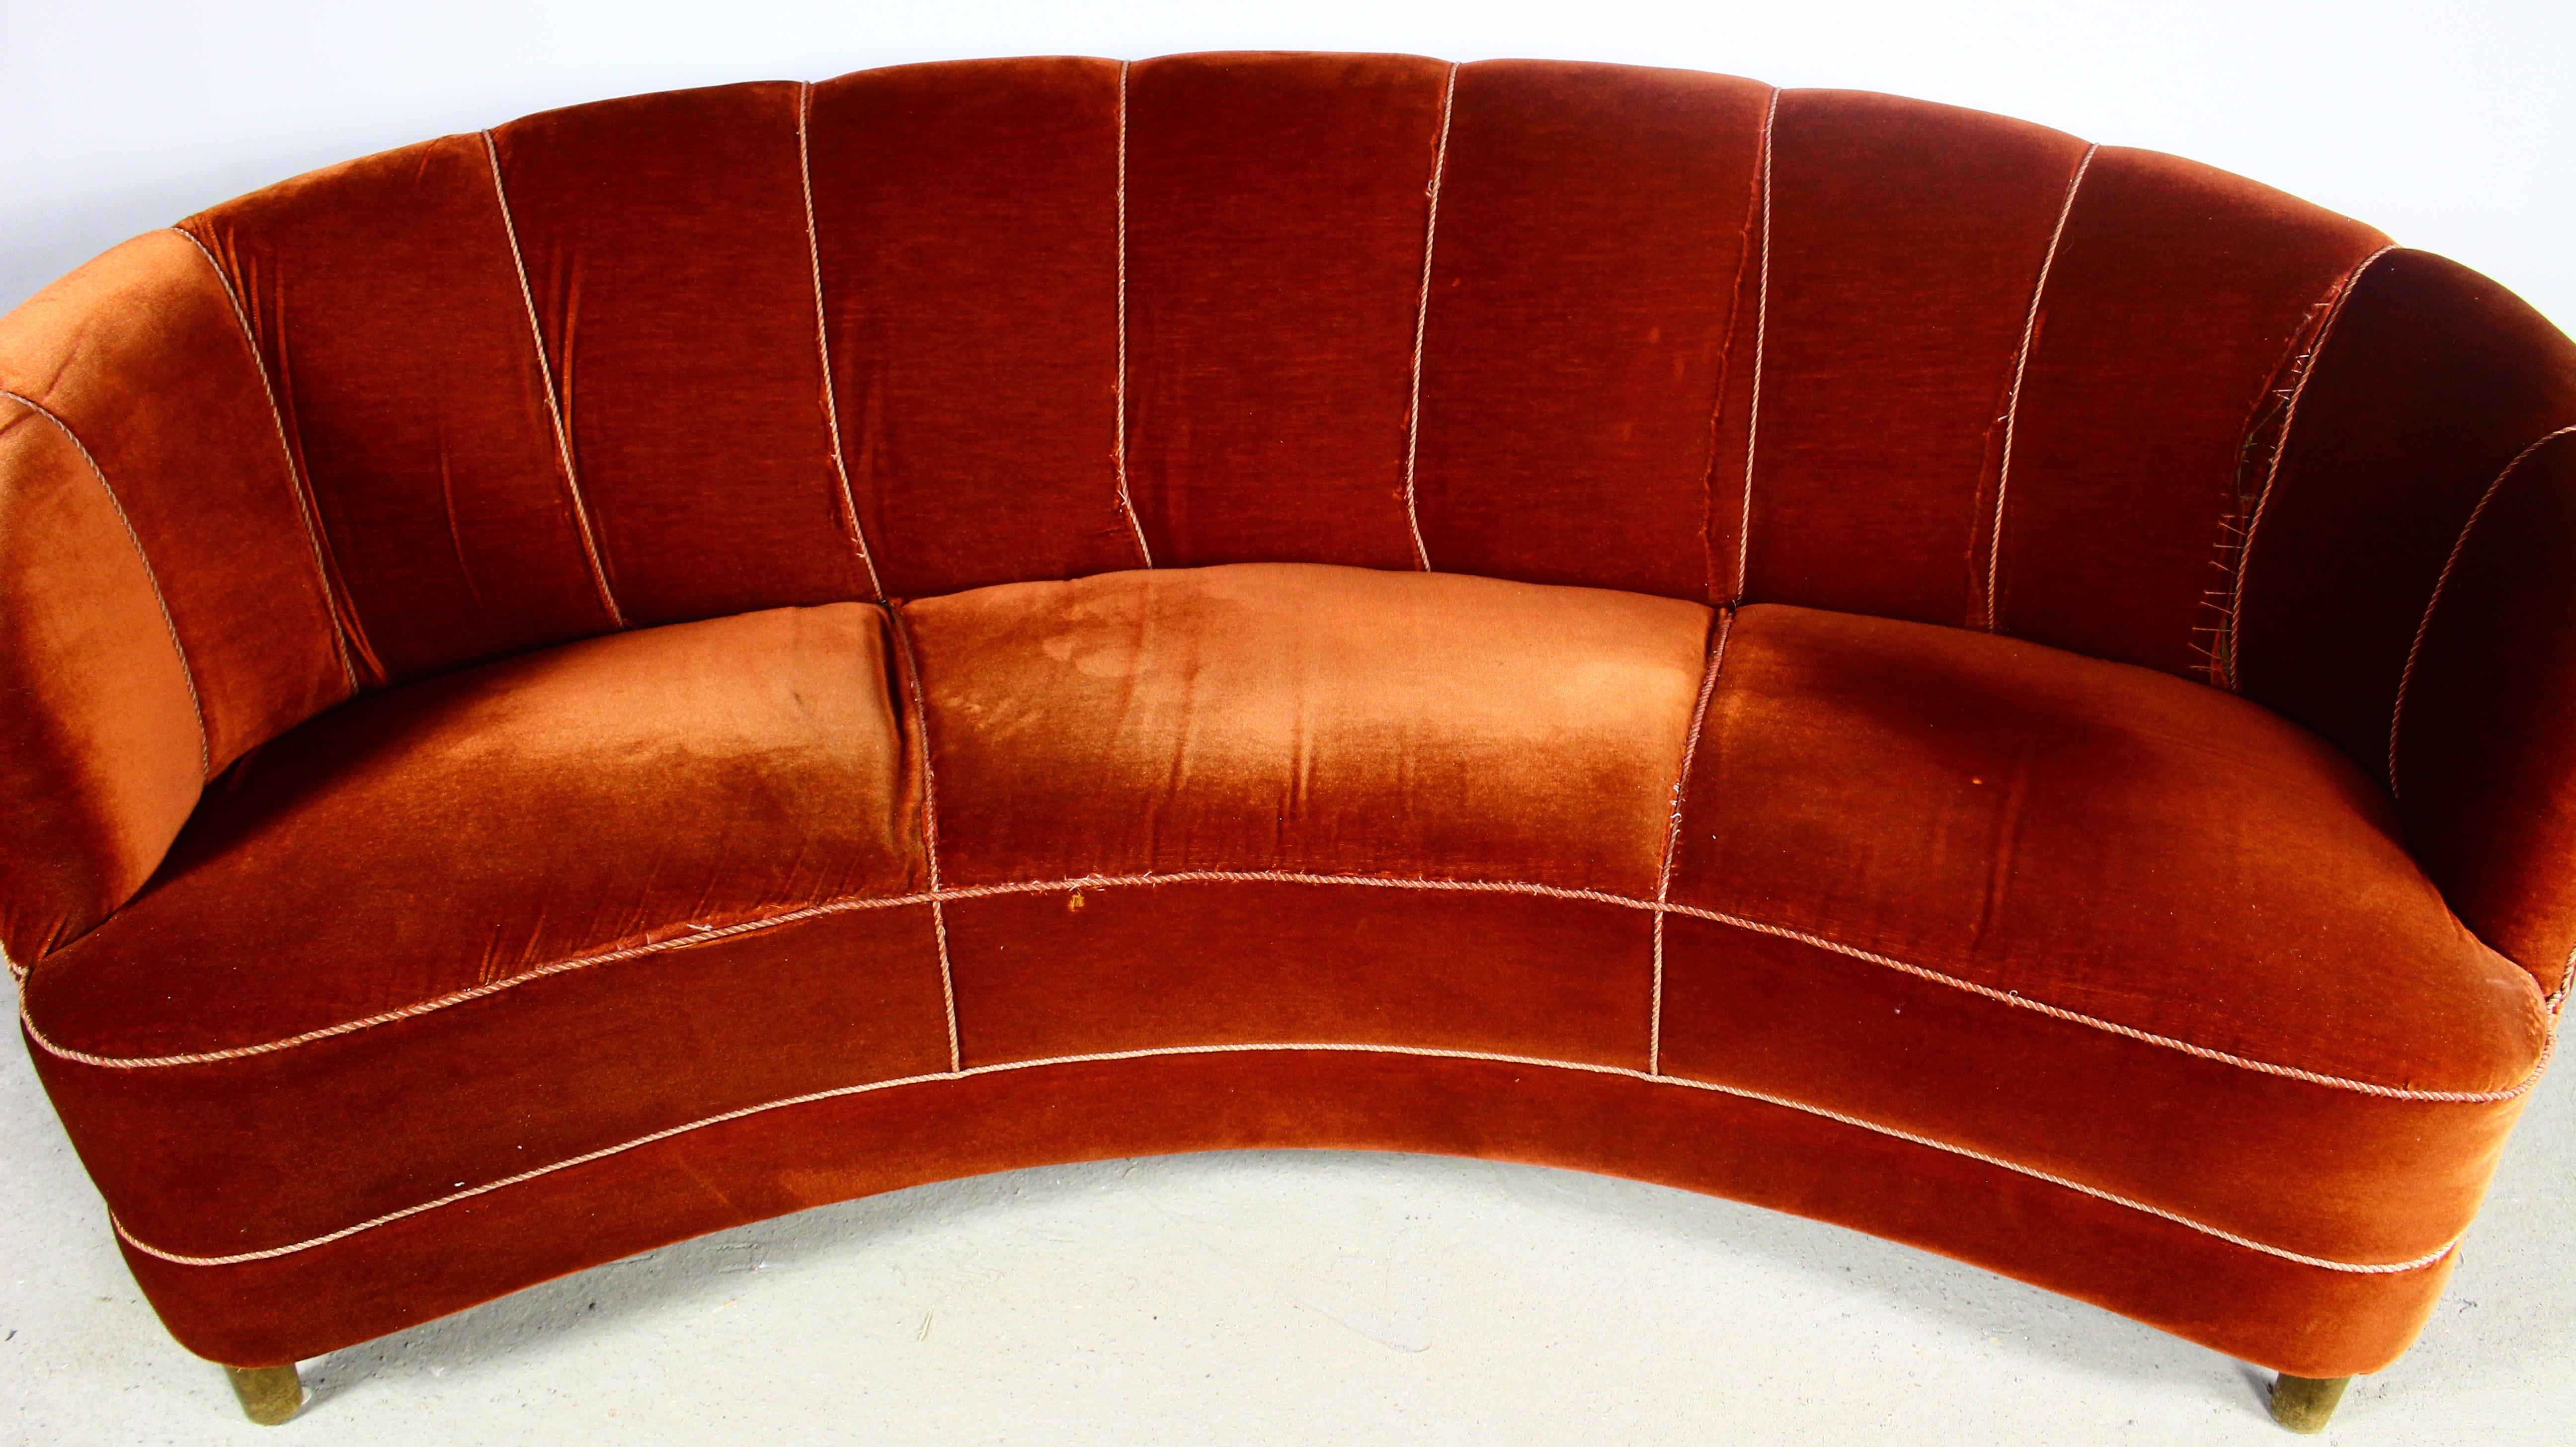 20th Century Danish Cabinetmaker Banana Curved Sofa, 1940s